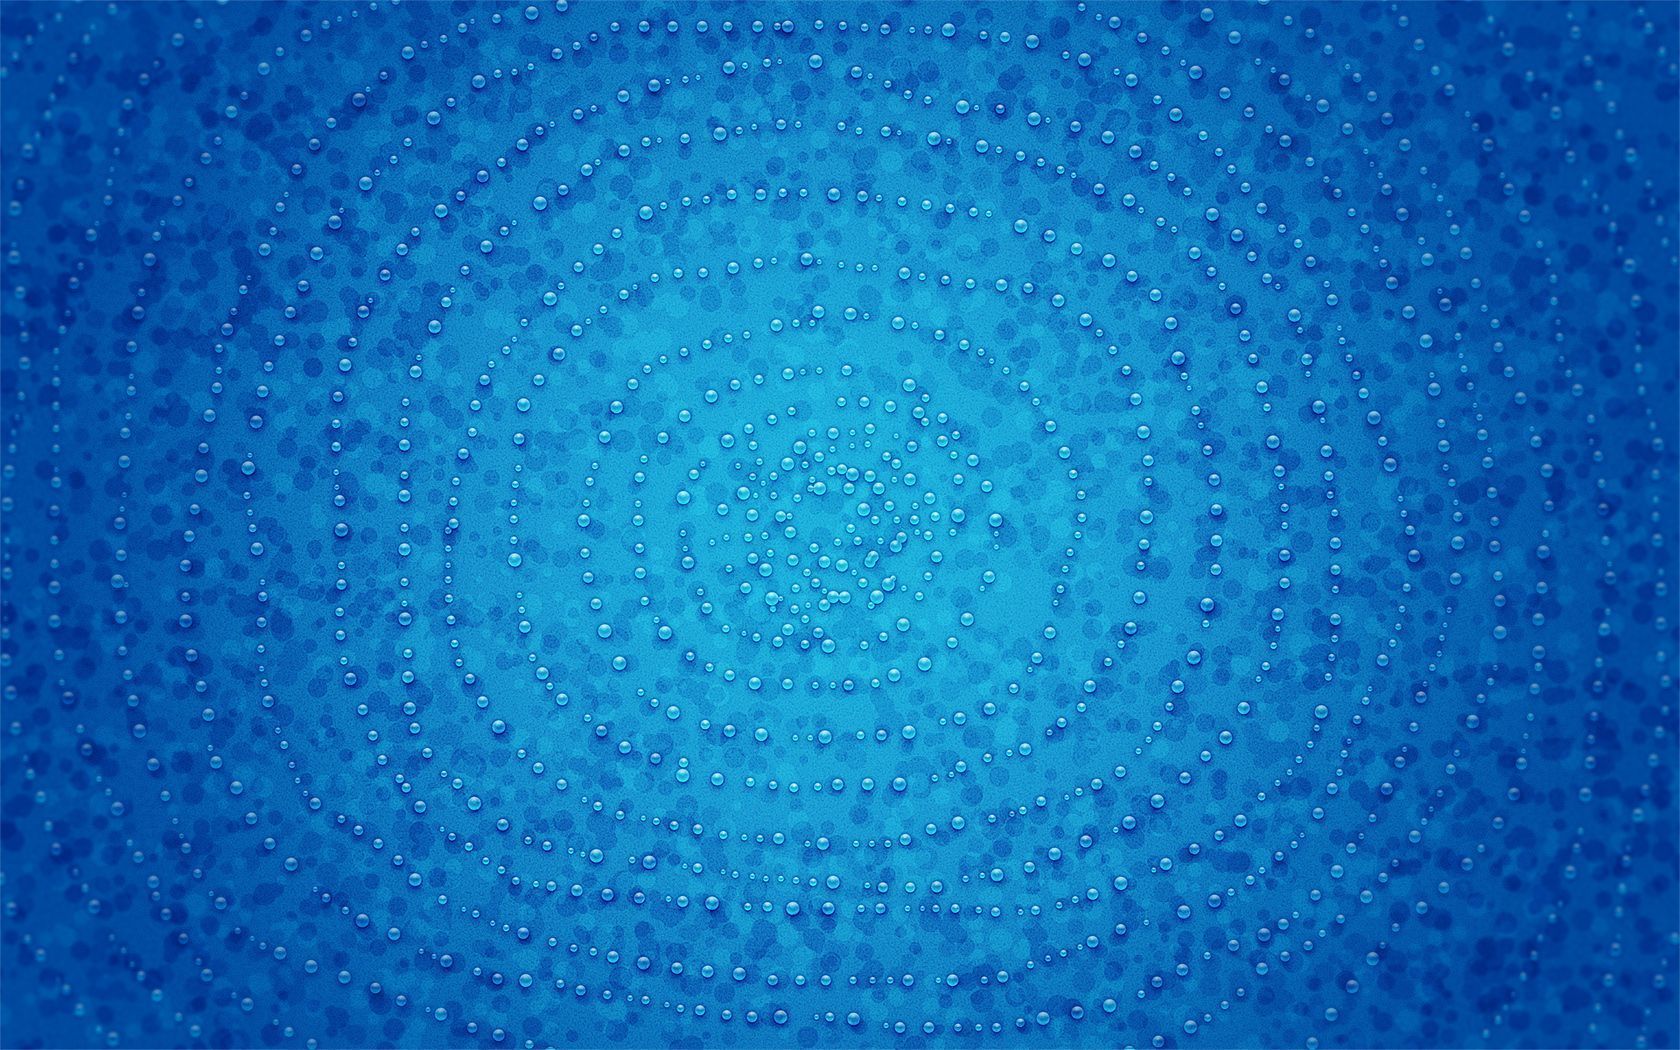 Blue Bubbles HD Wallpapers